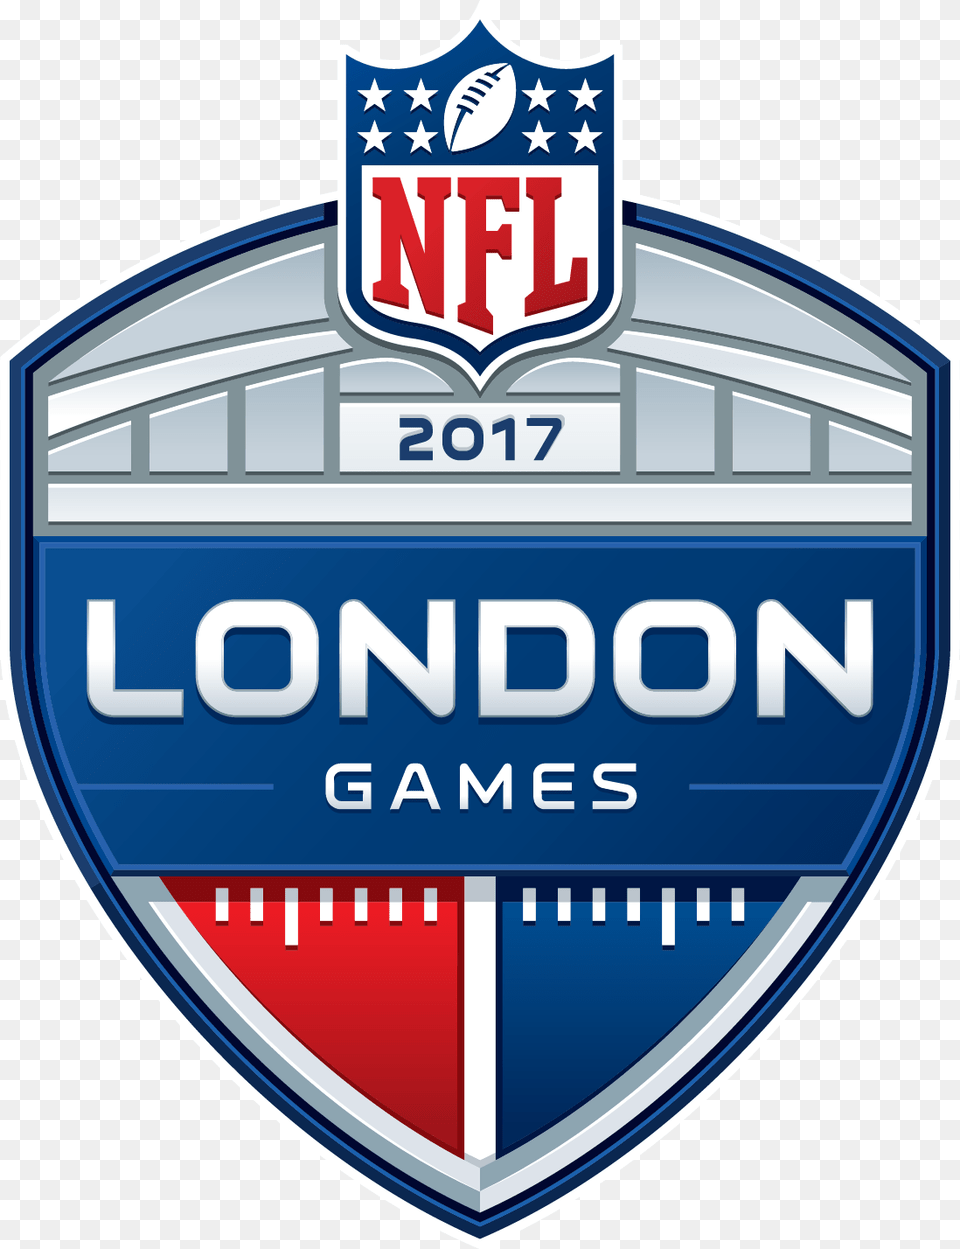 London Games 2019 Nfl, Badge, Logo, Symbol, Scoreboard Png Image